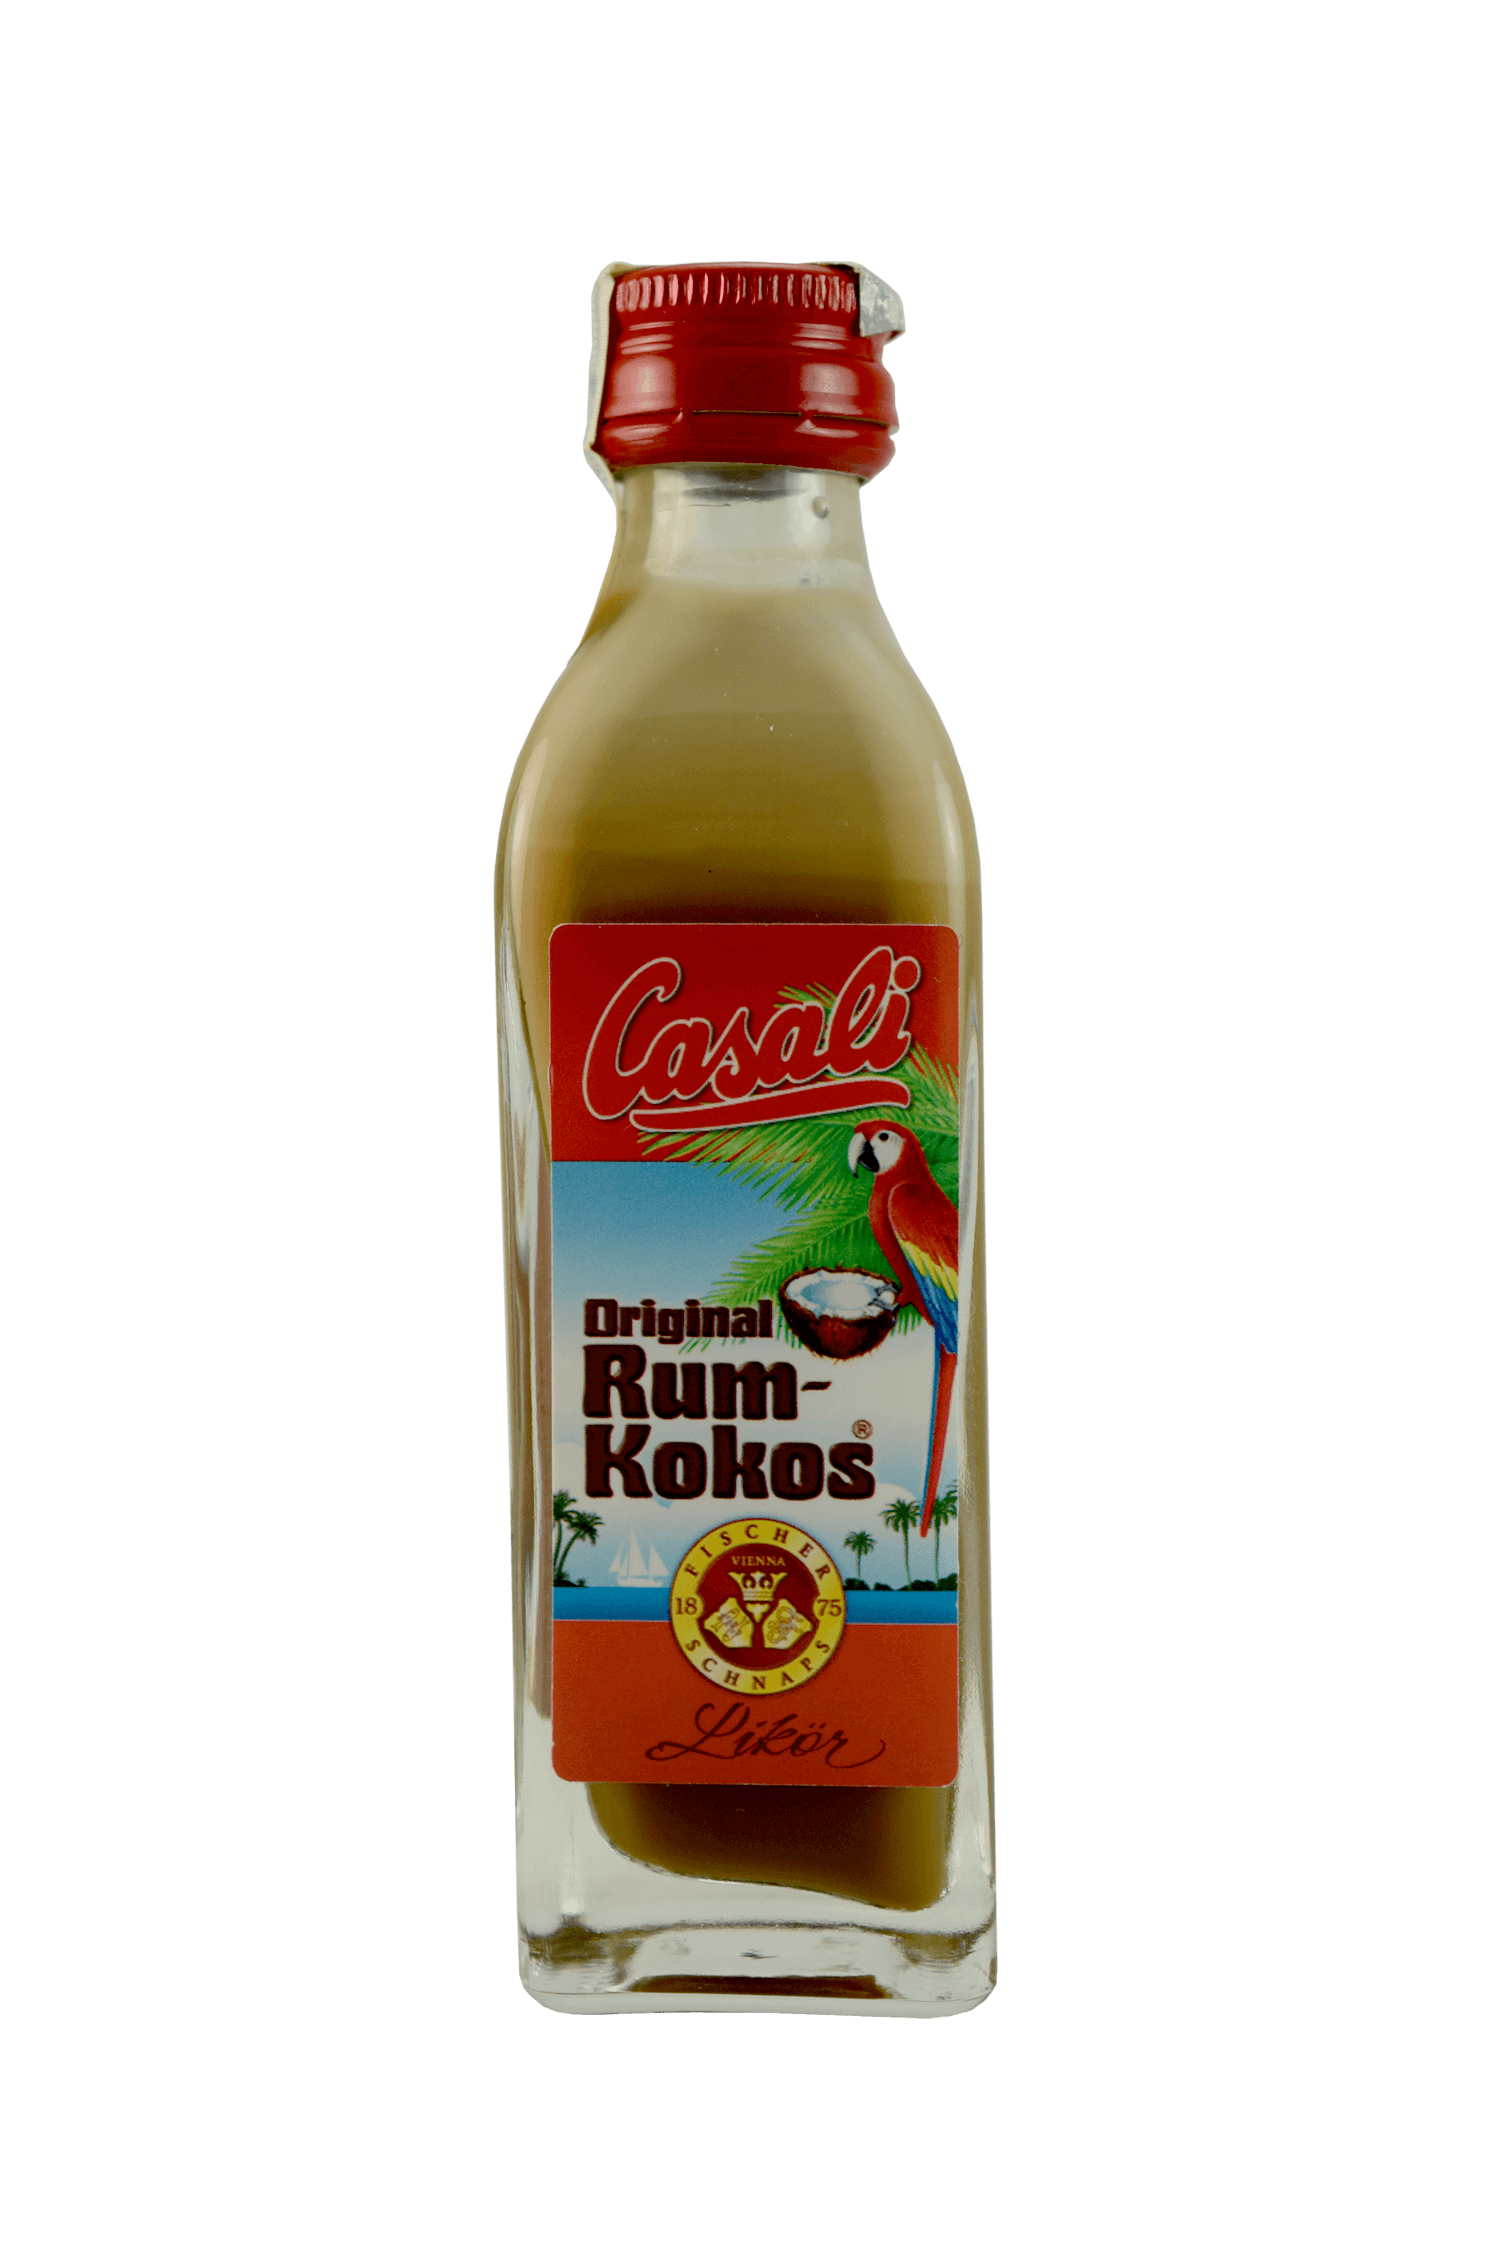 Casali Original Rum – Kokos